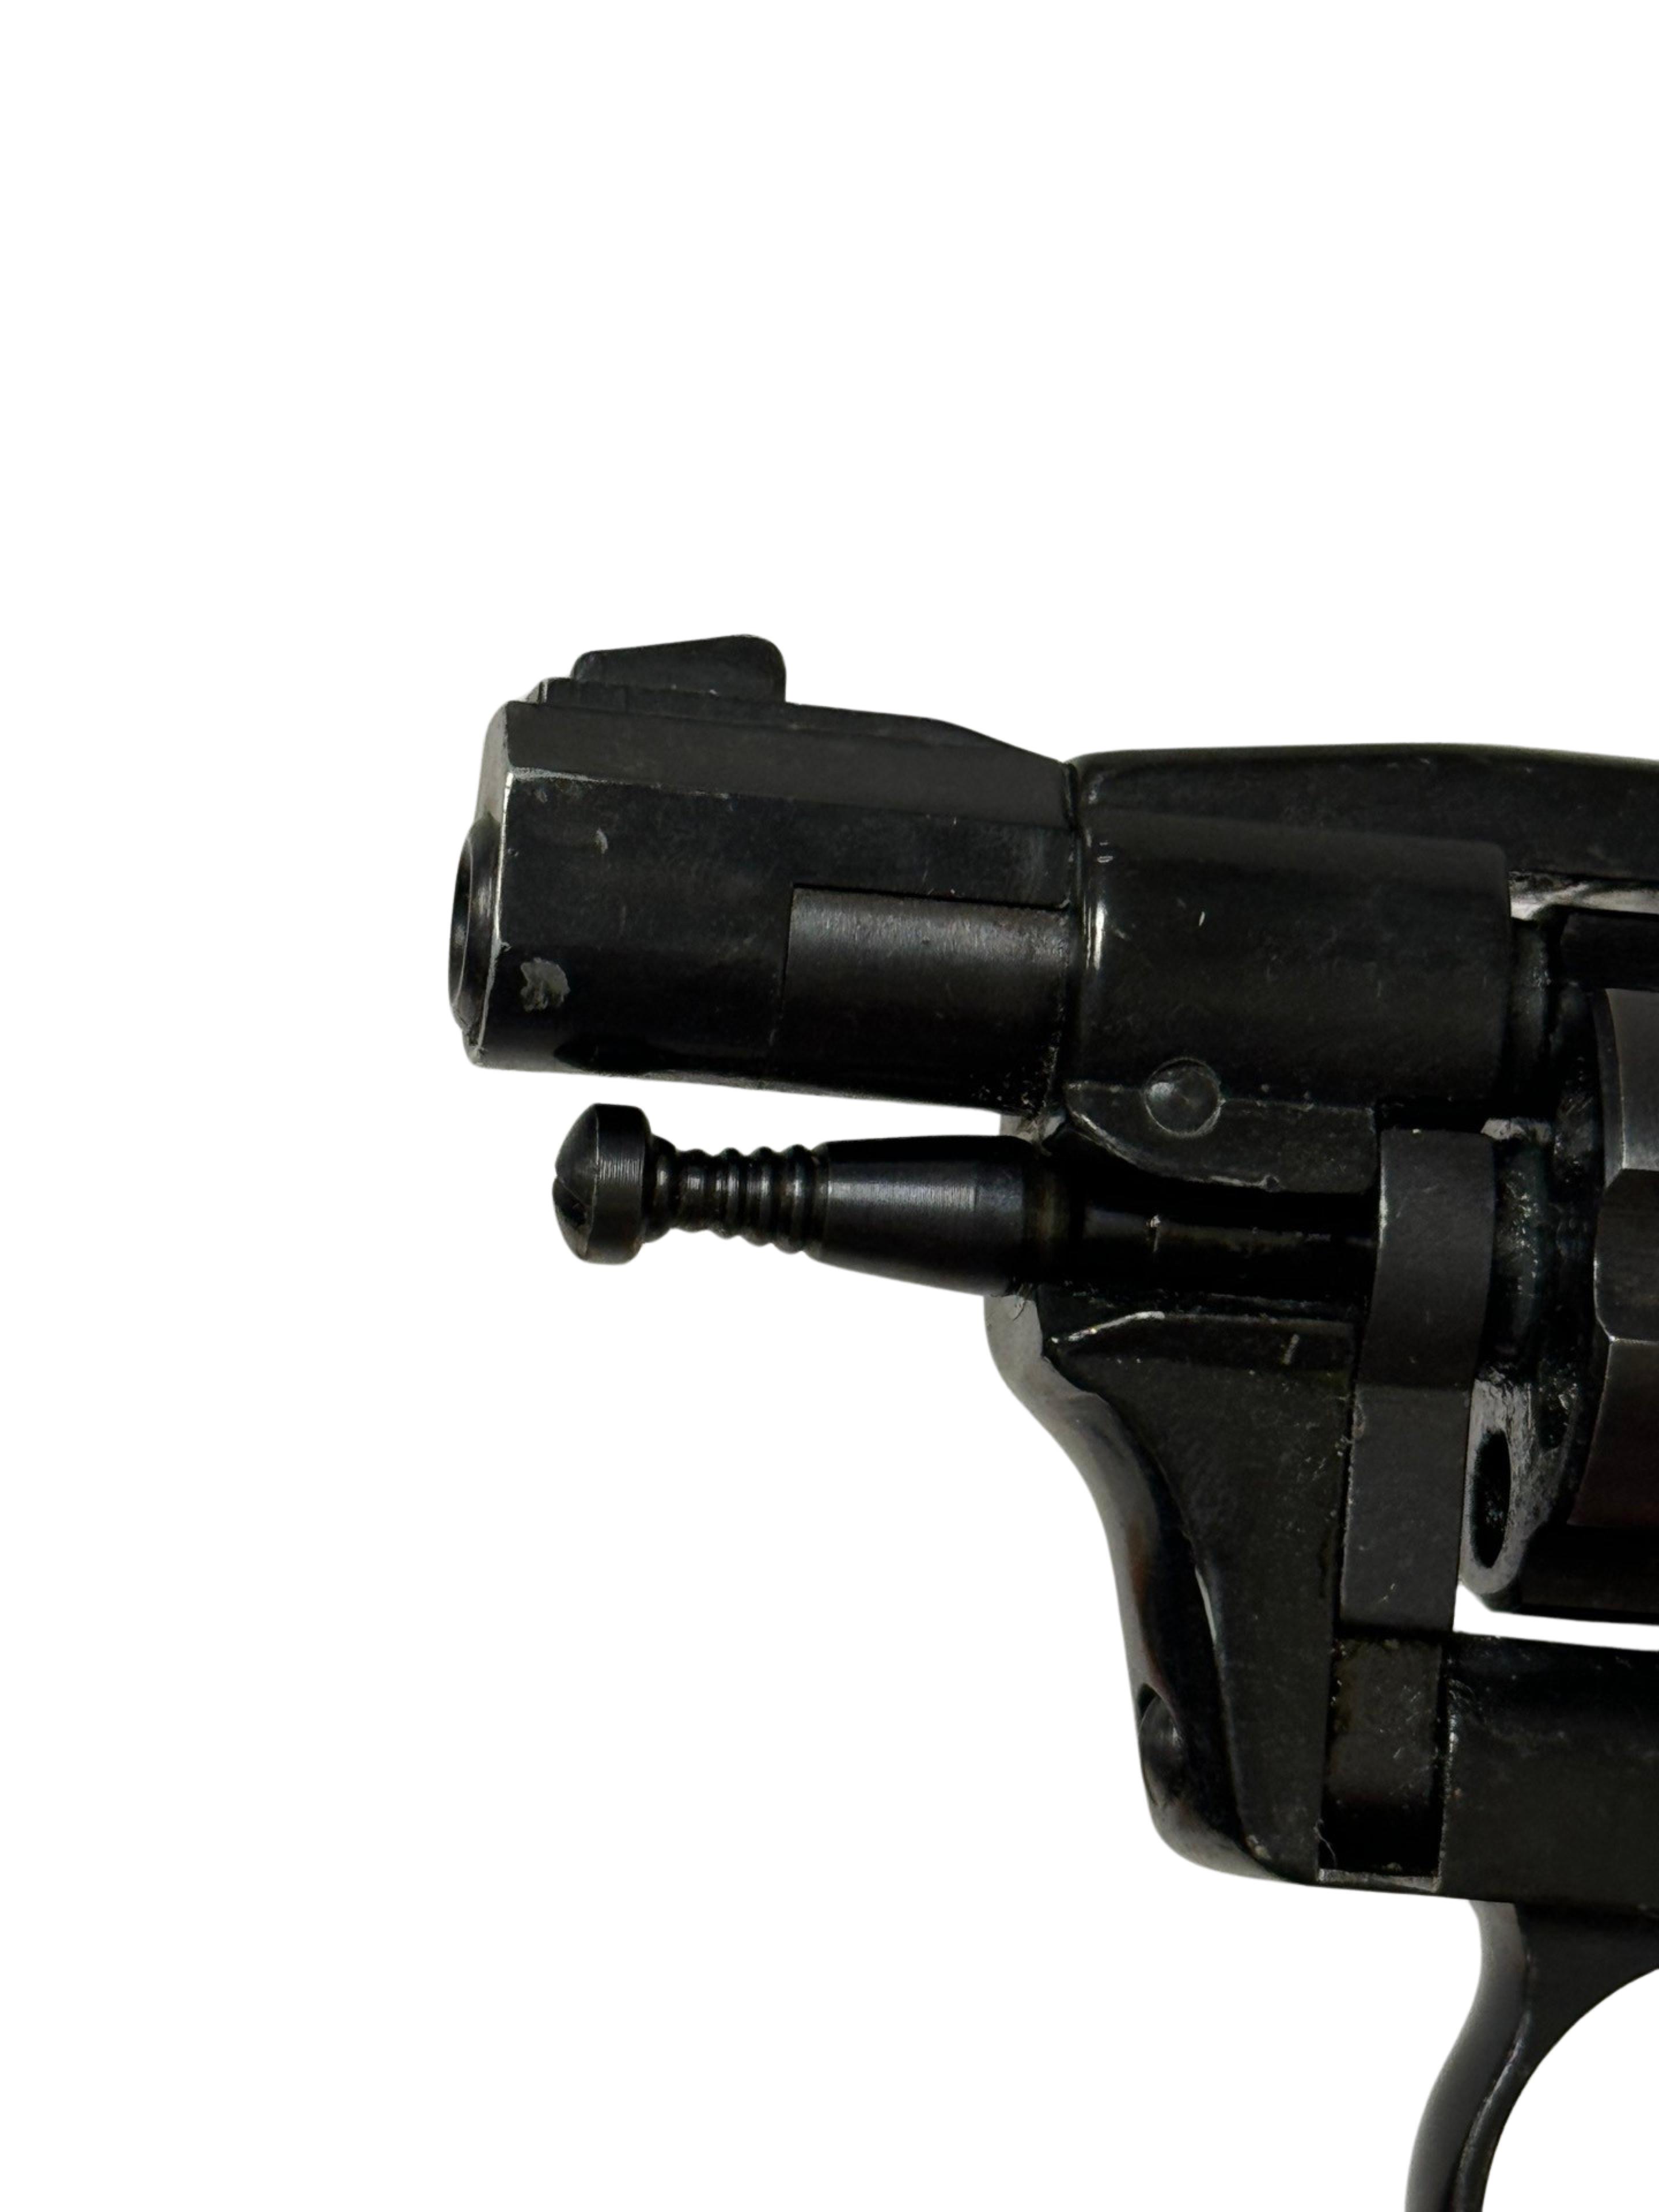 German Rohm RG Industries Model RG23 .22 LR Revolver